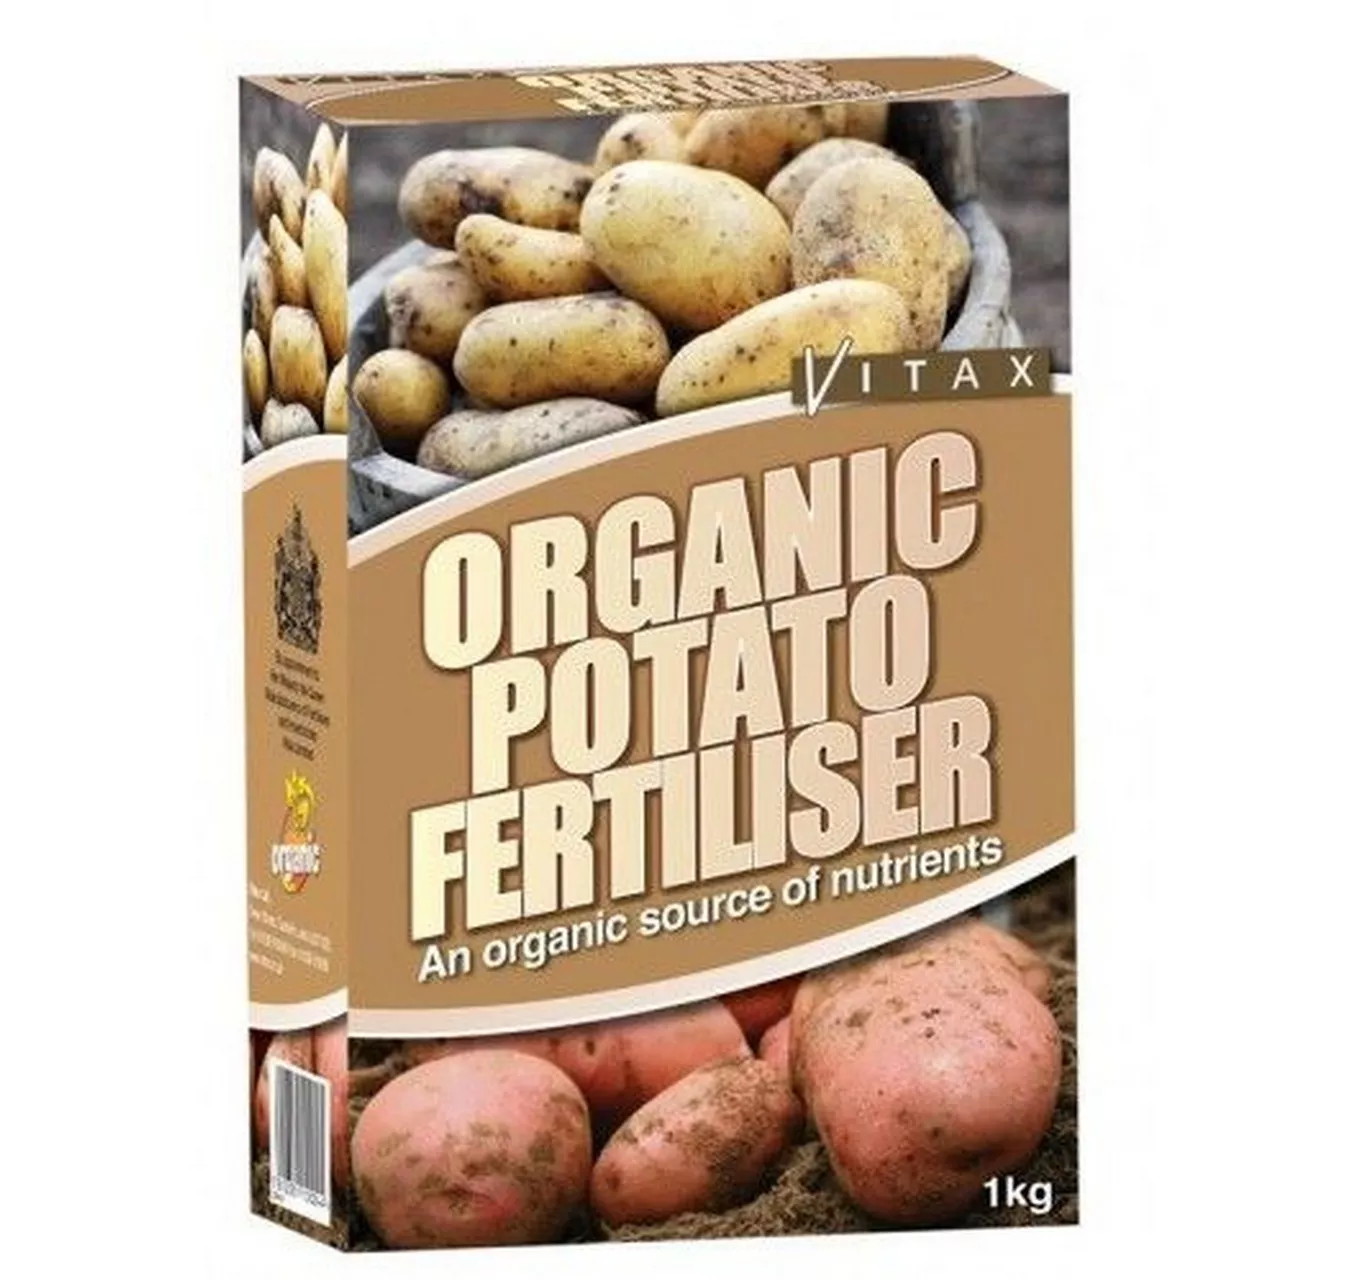 Organic Potato Fertilizer 1kg